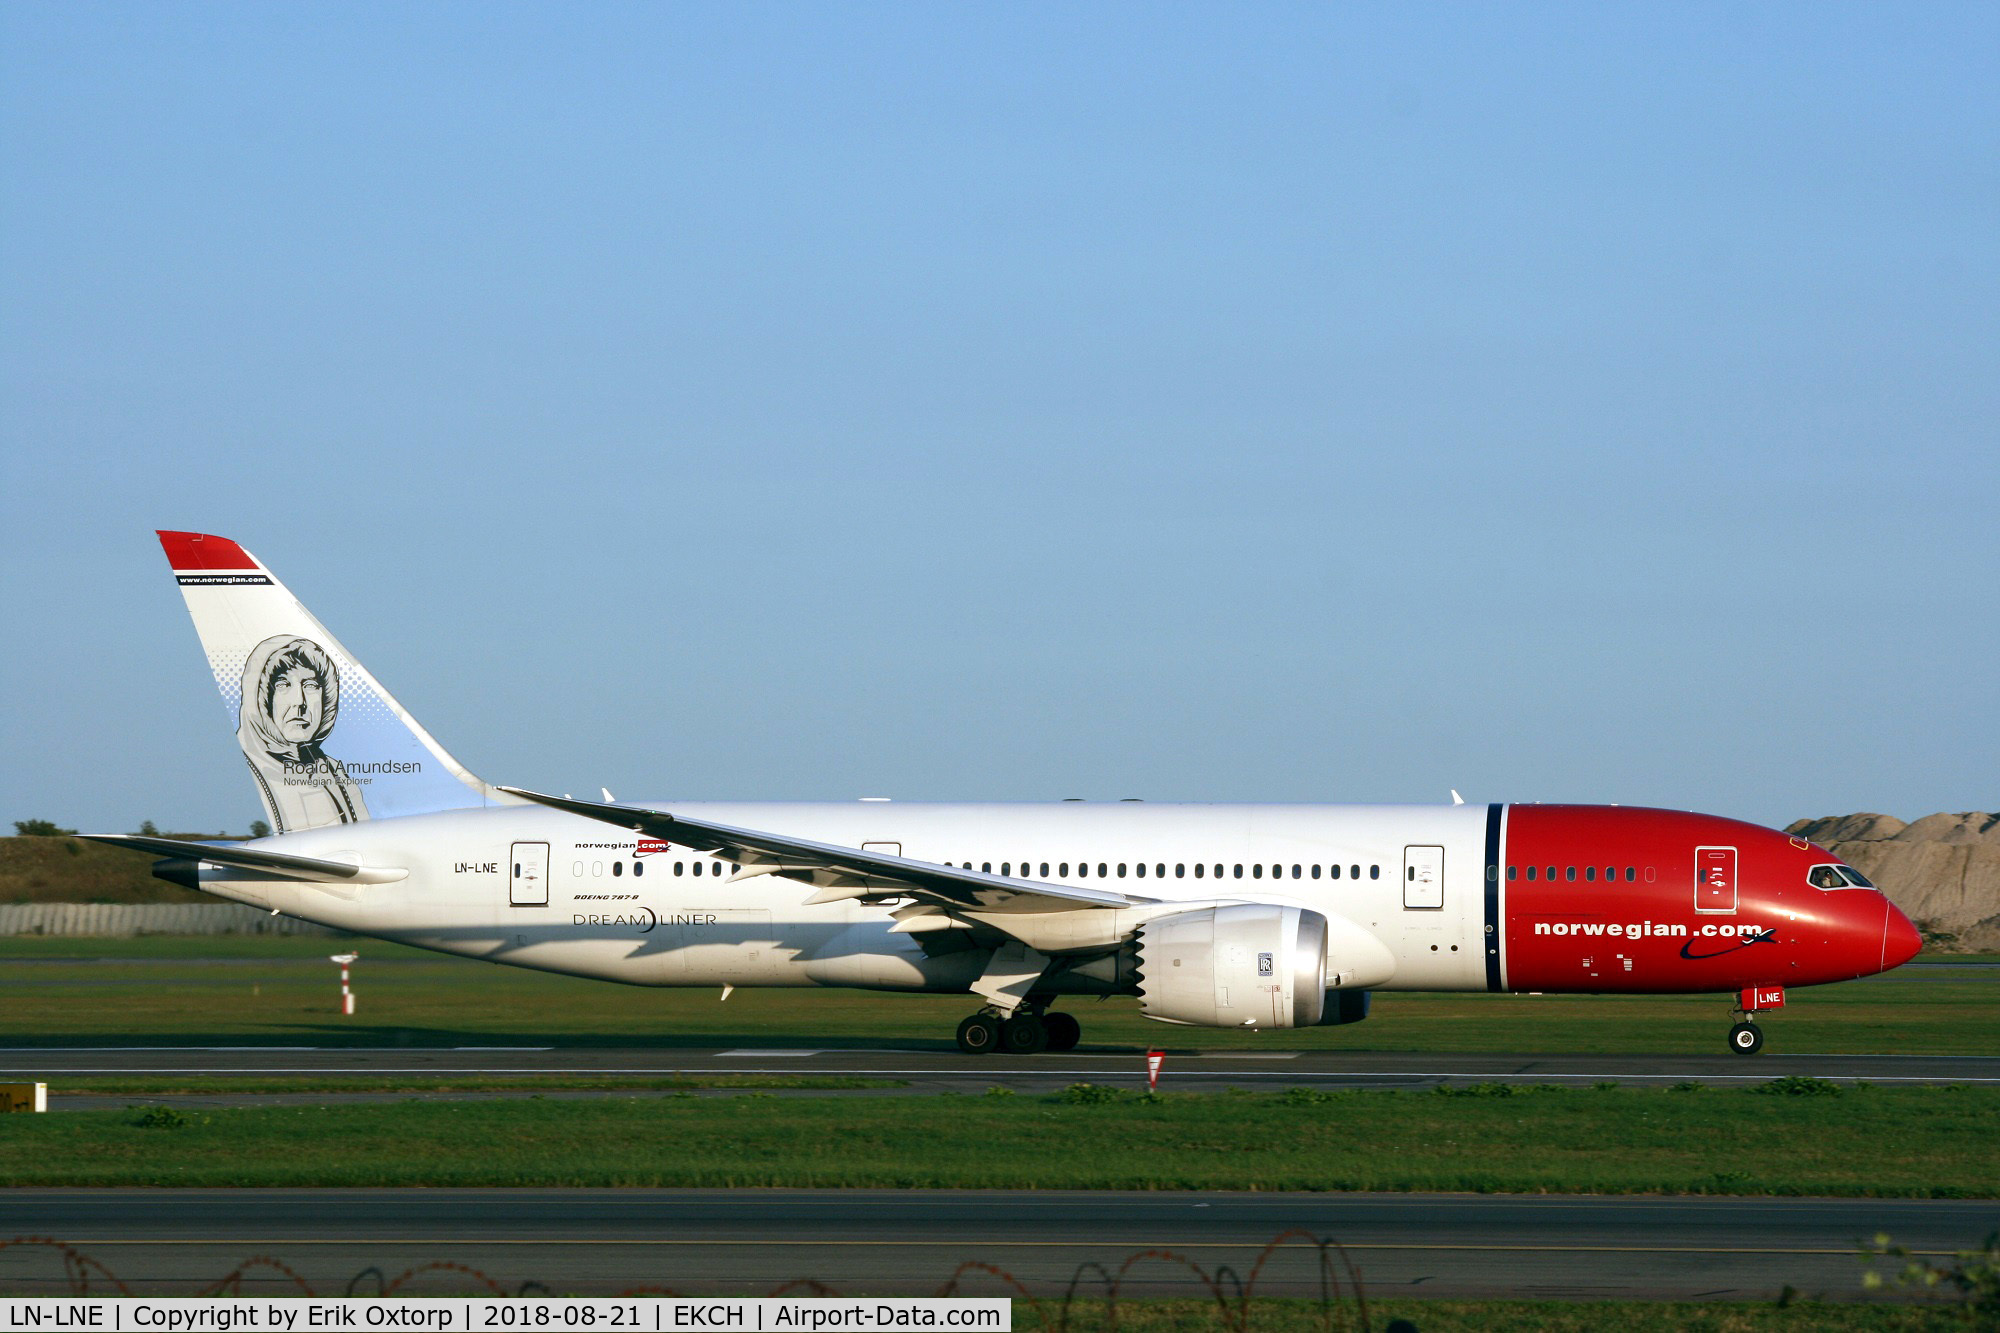 LN-LNE, 2014 Boeing 787-8 Dreamliner C/N 34796, LN-LNE taking off rw 22R